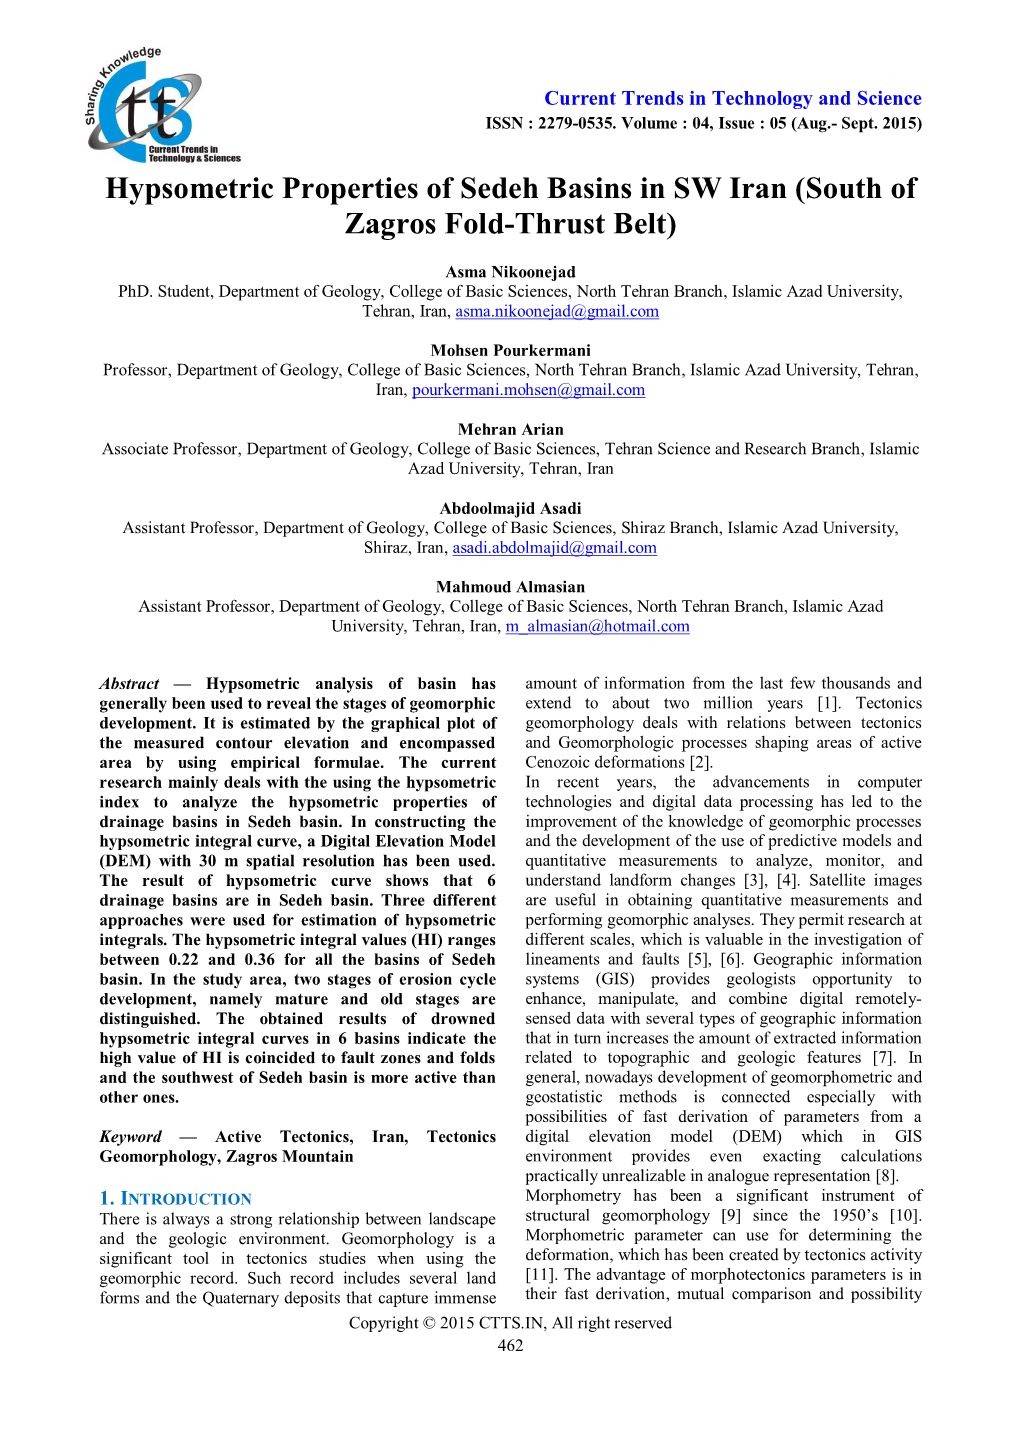 Hypsometric Properties of Sedeh Basins in SW Iran (South of Zagros Fold-Thrust Belt)